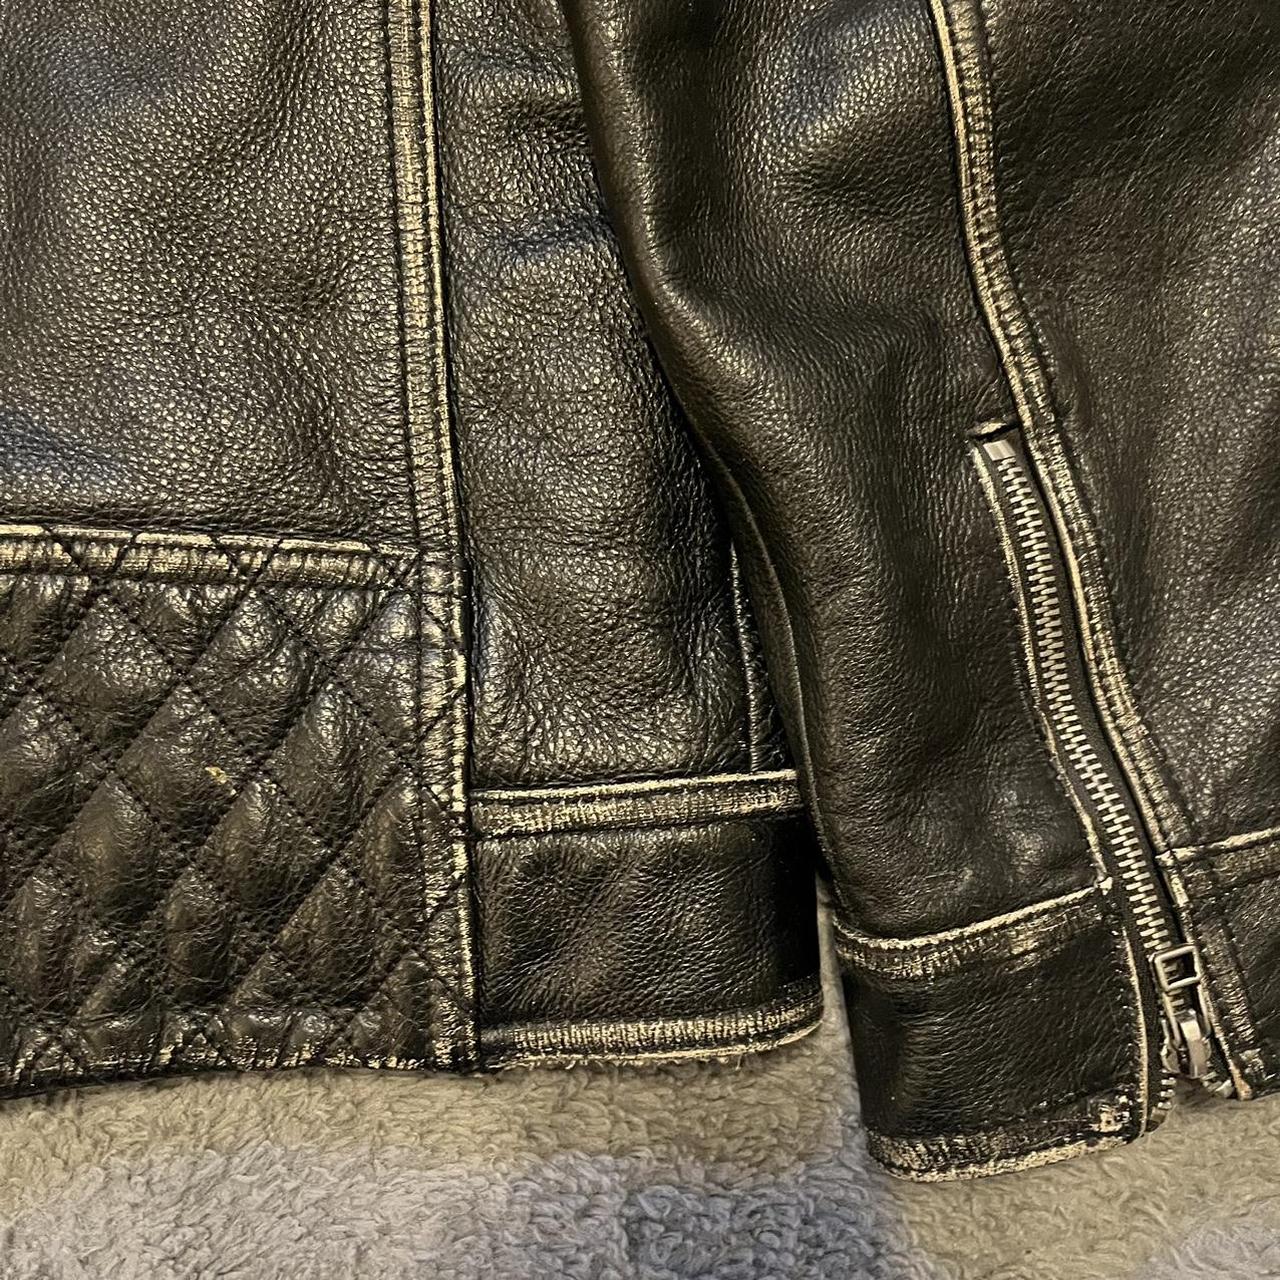 Crazy tuff affliction limited edition leather jacket... - Depop